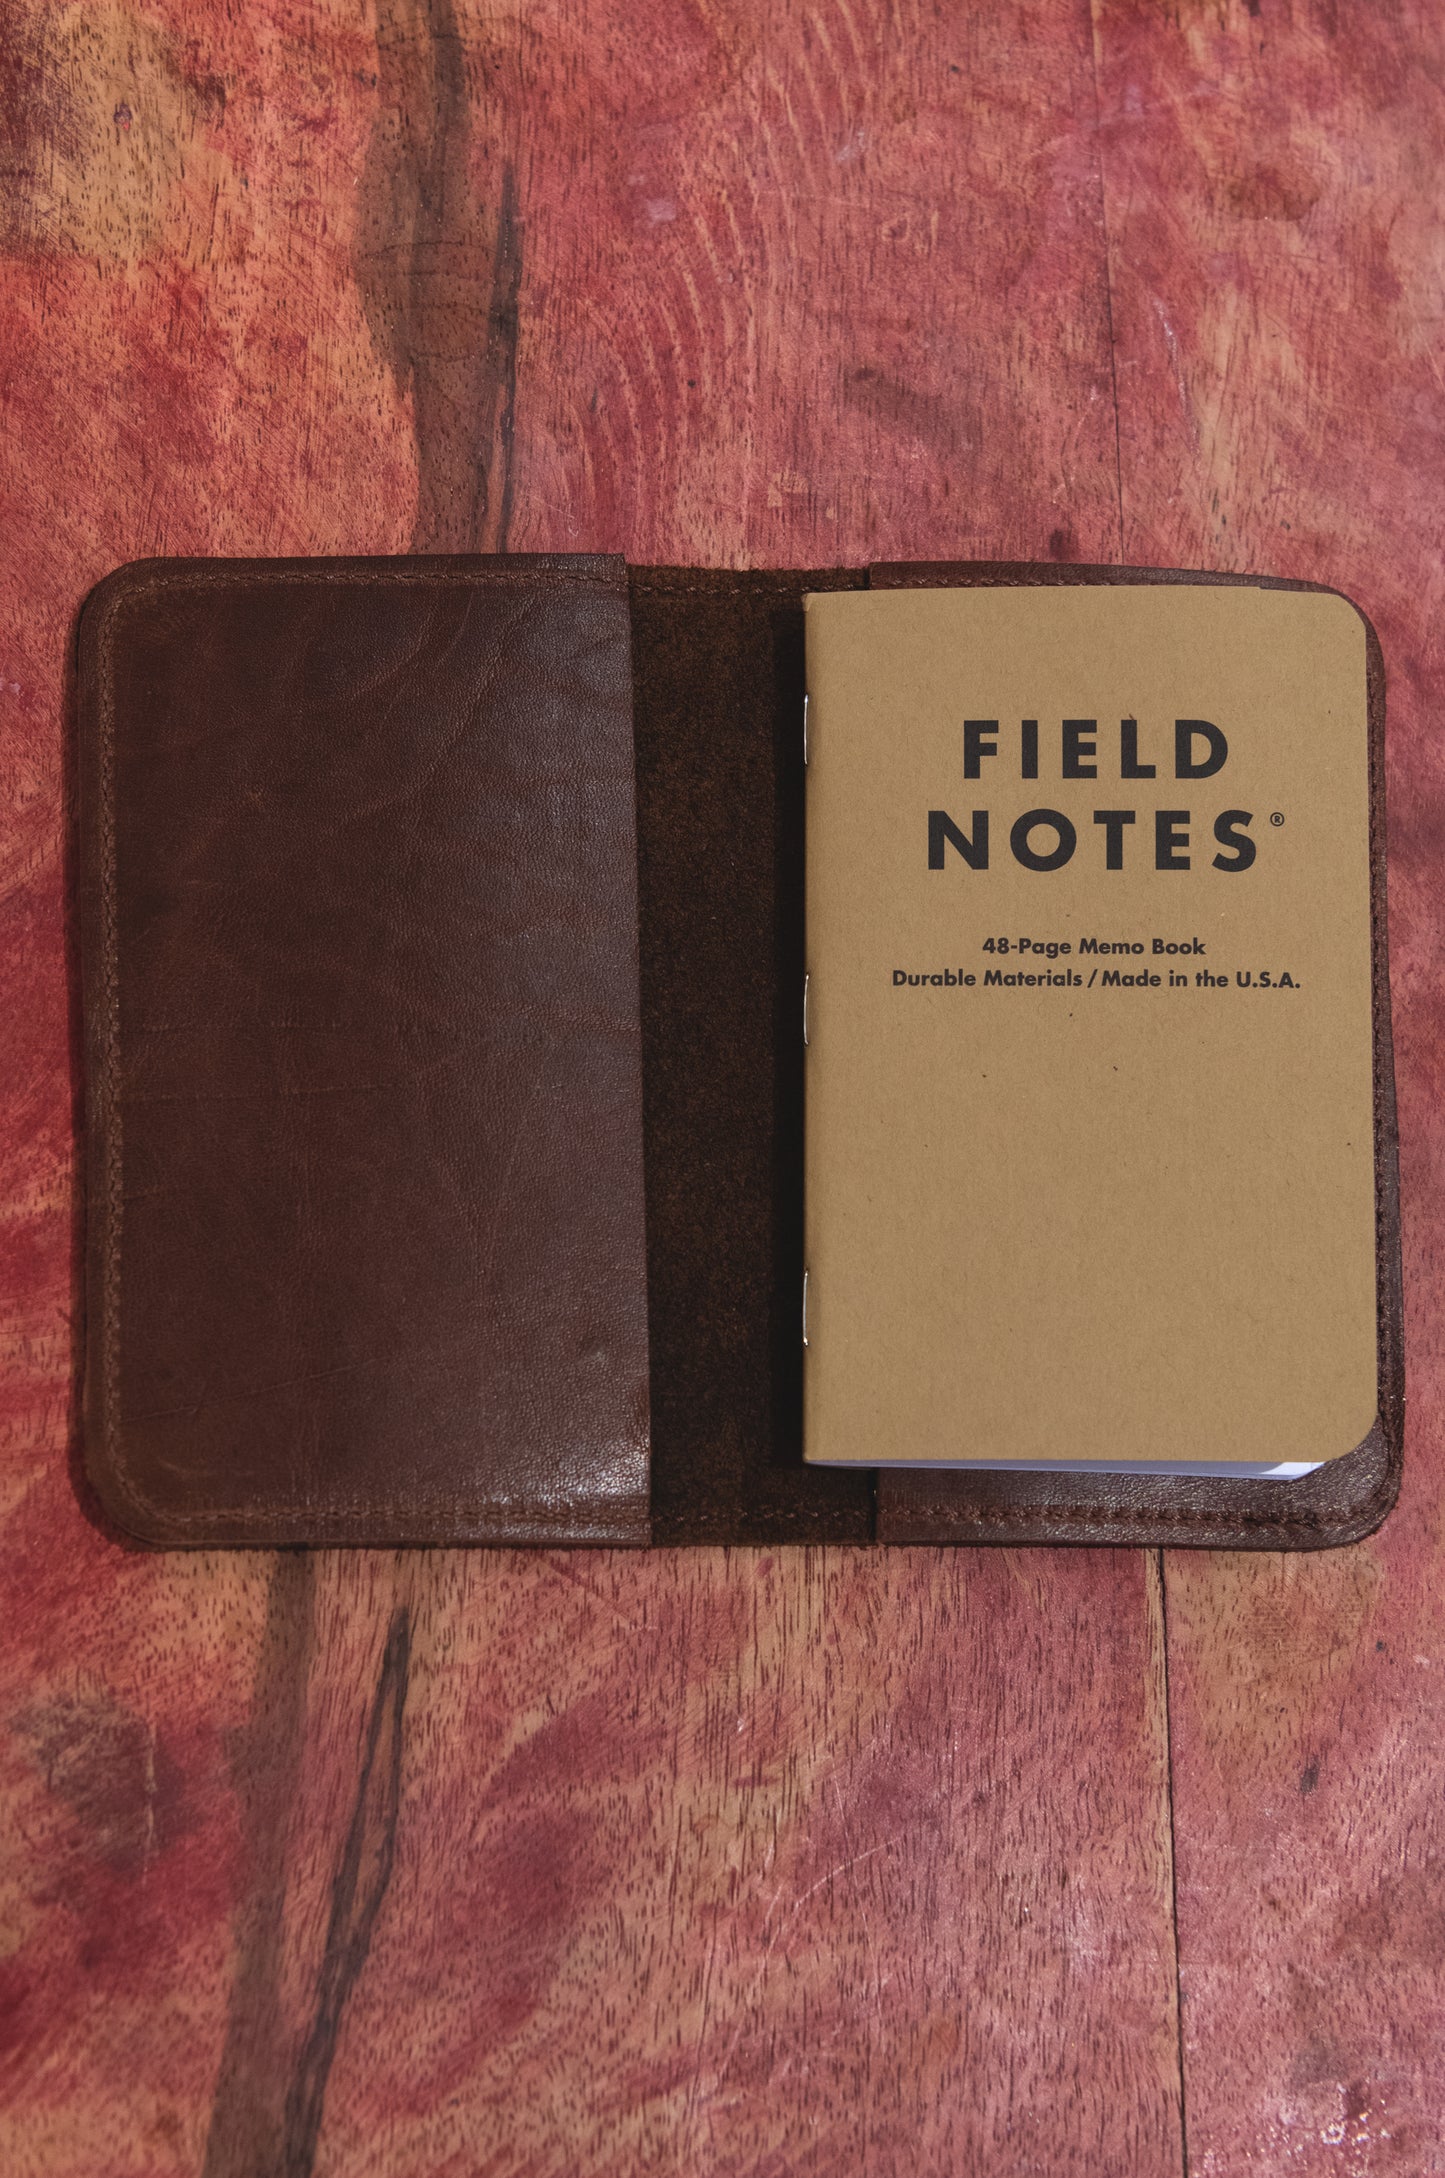 The Field Journal